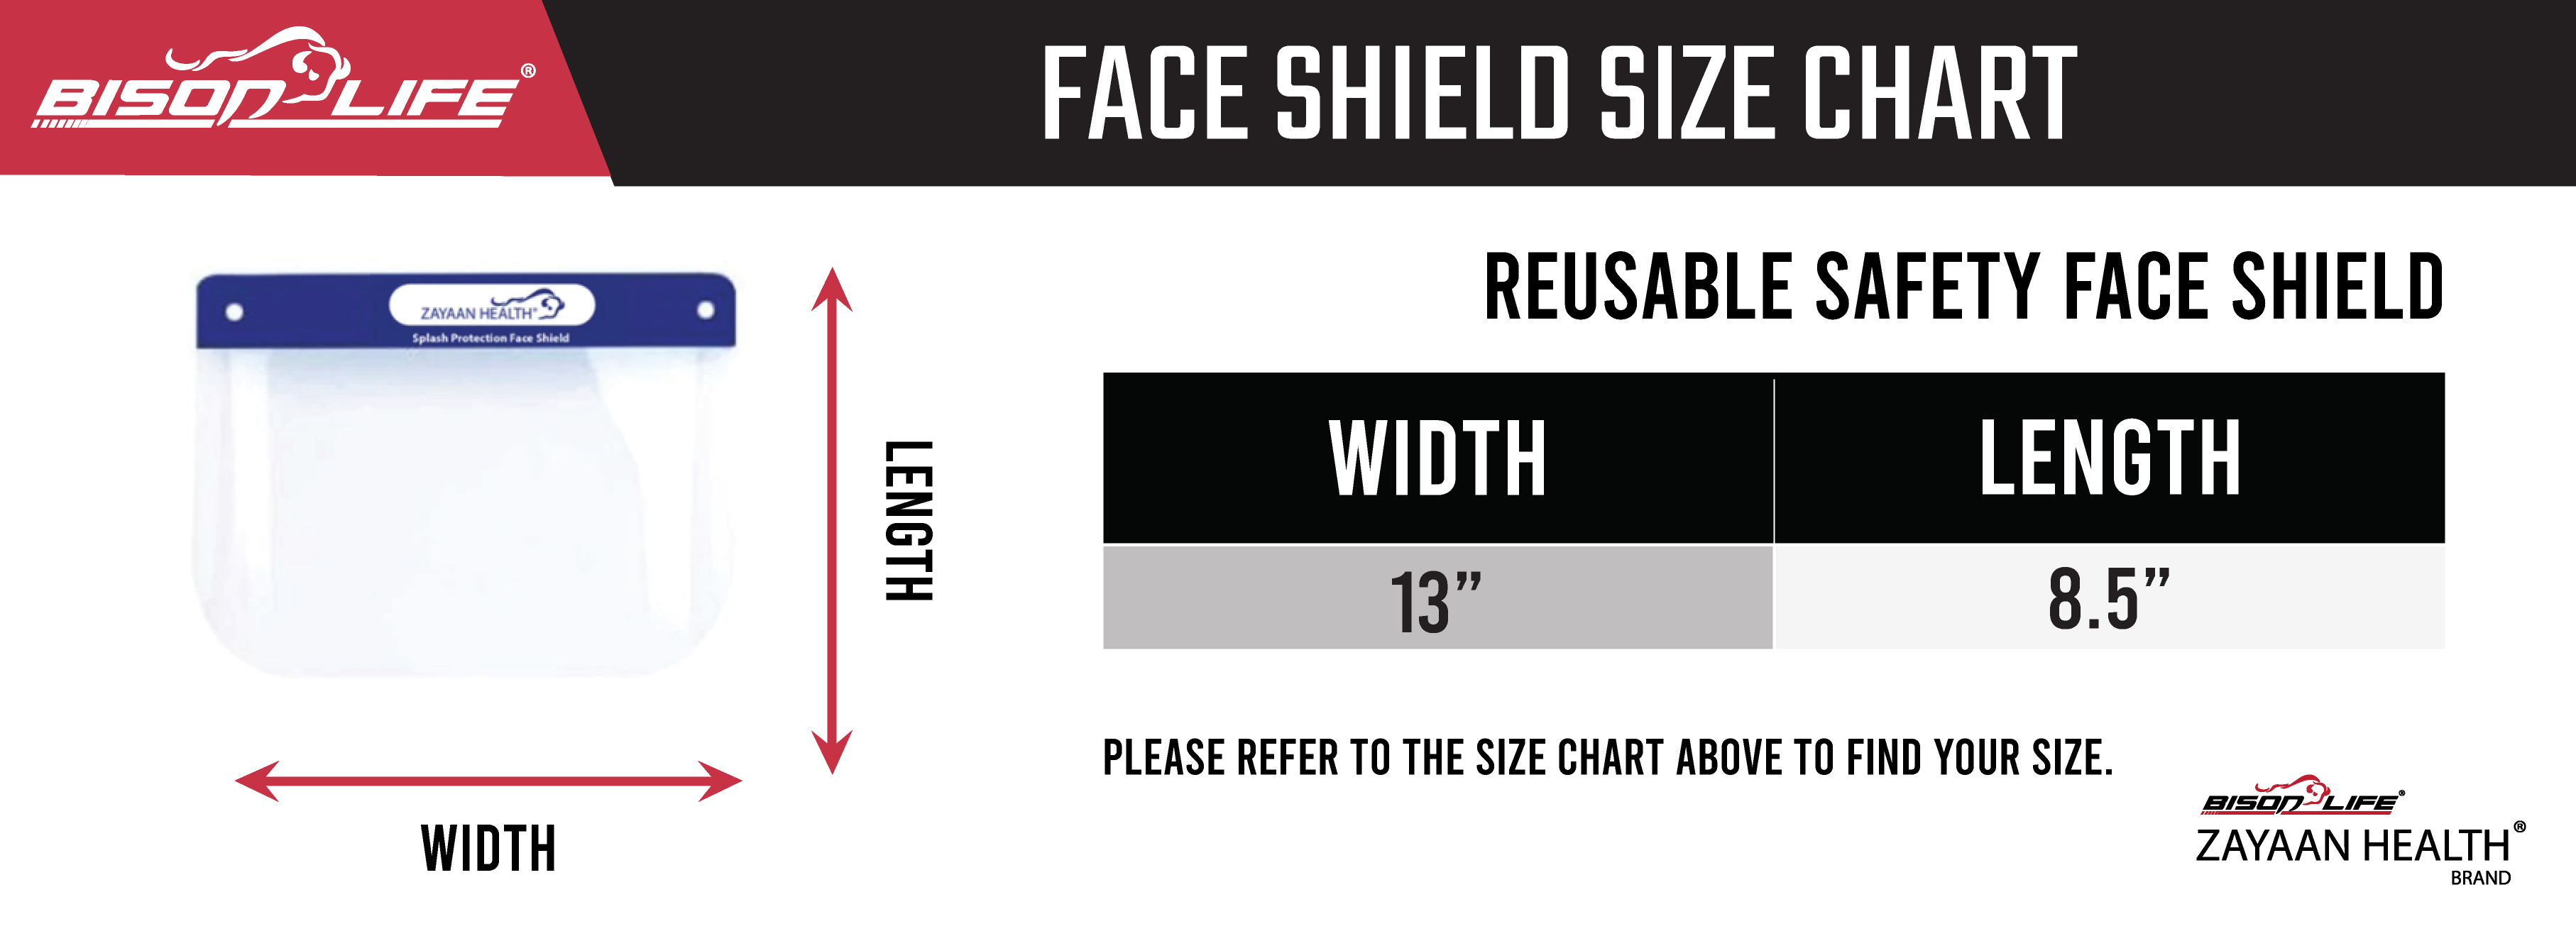 Zayaan Health Reusable Safety Face Shield Size Chart